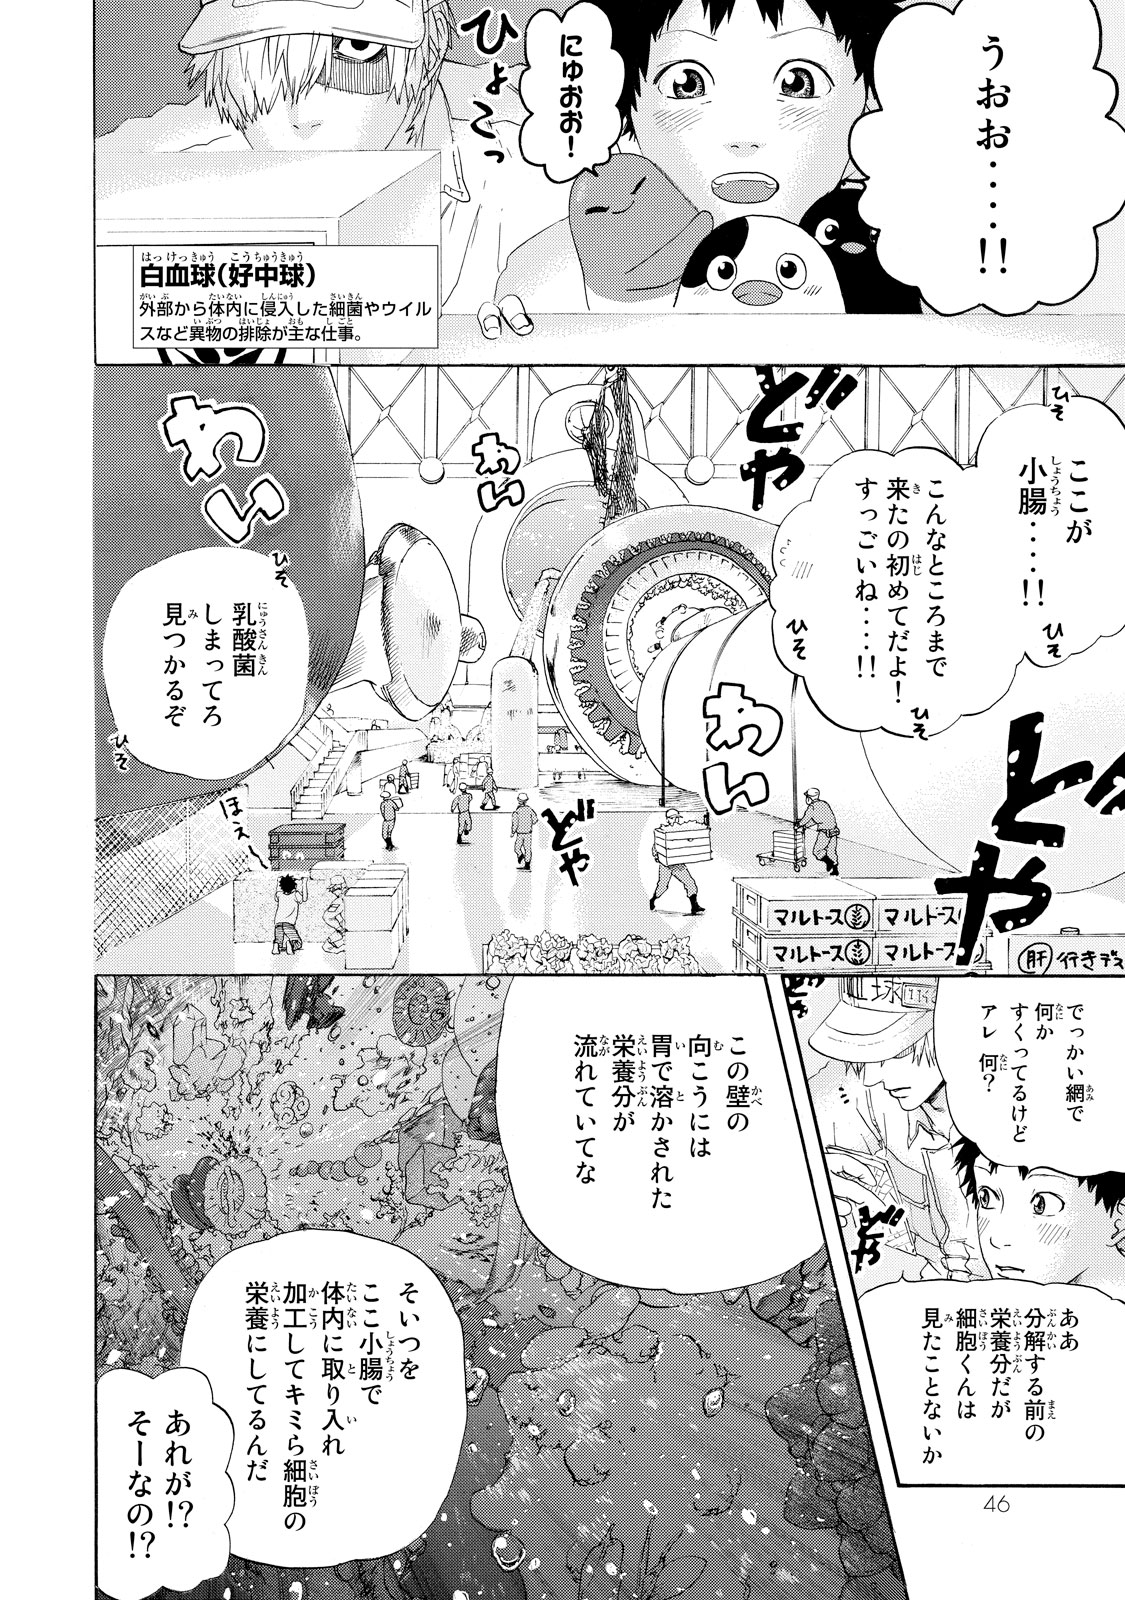 Hataraku Saibou - Chapter 21 - Page 2